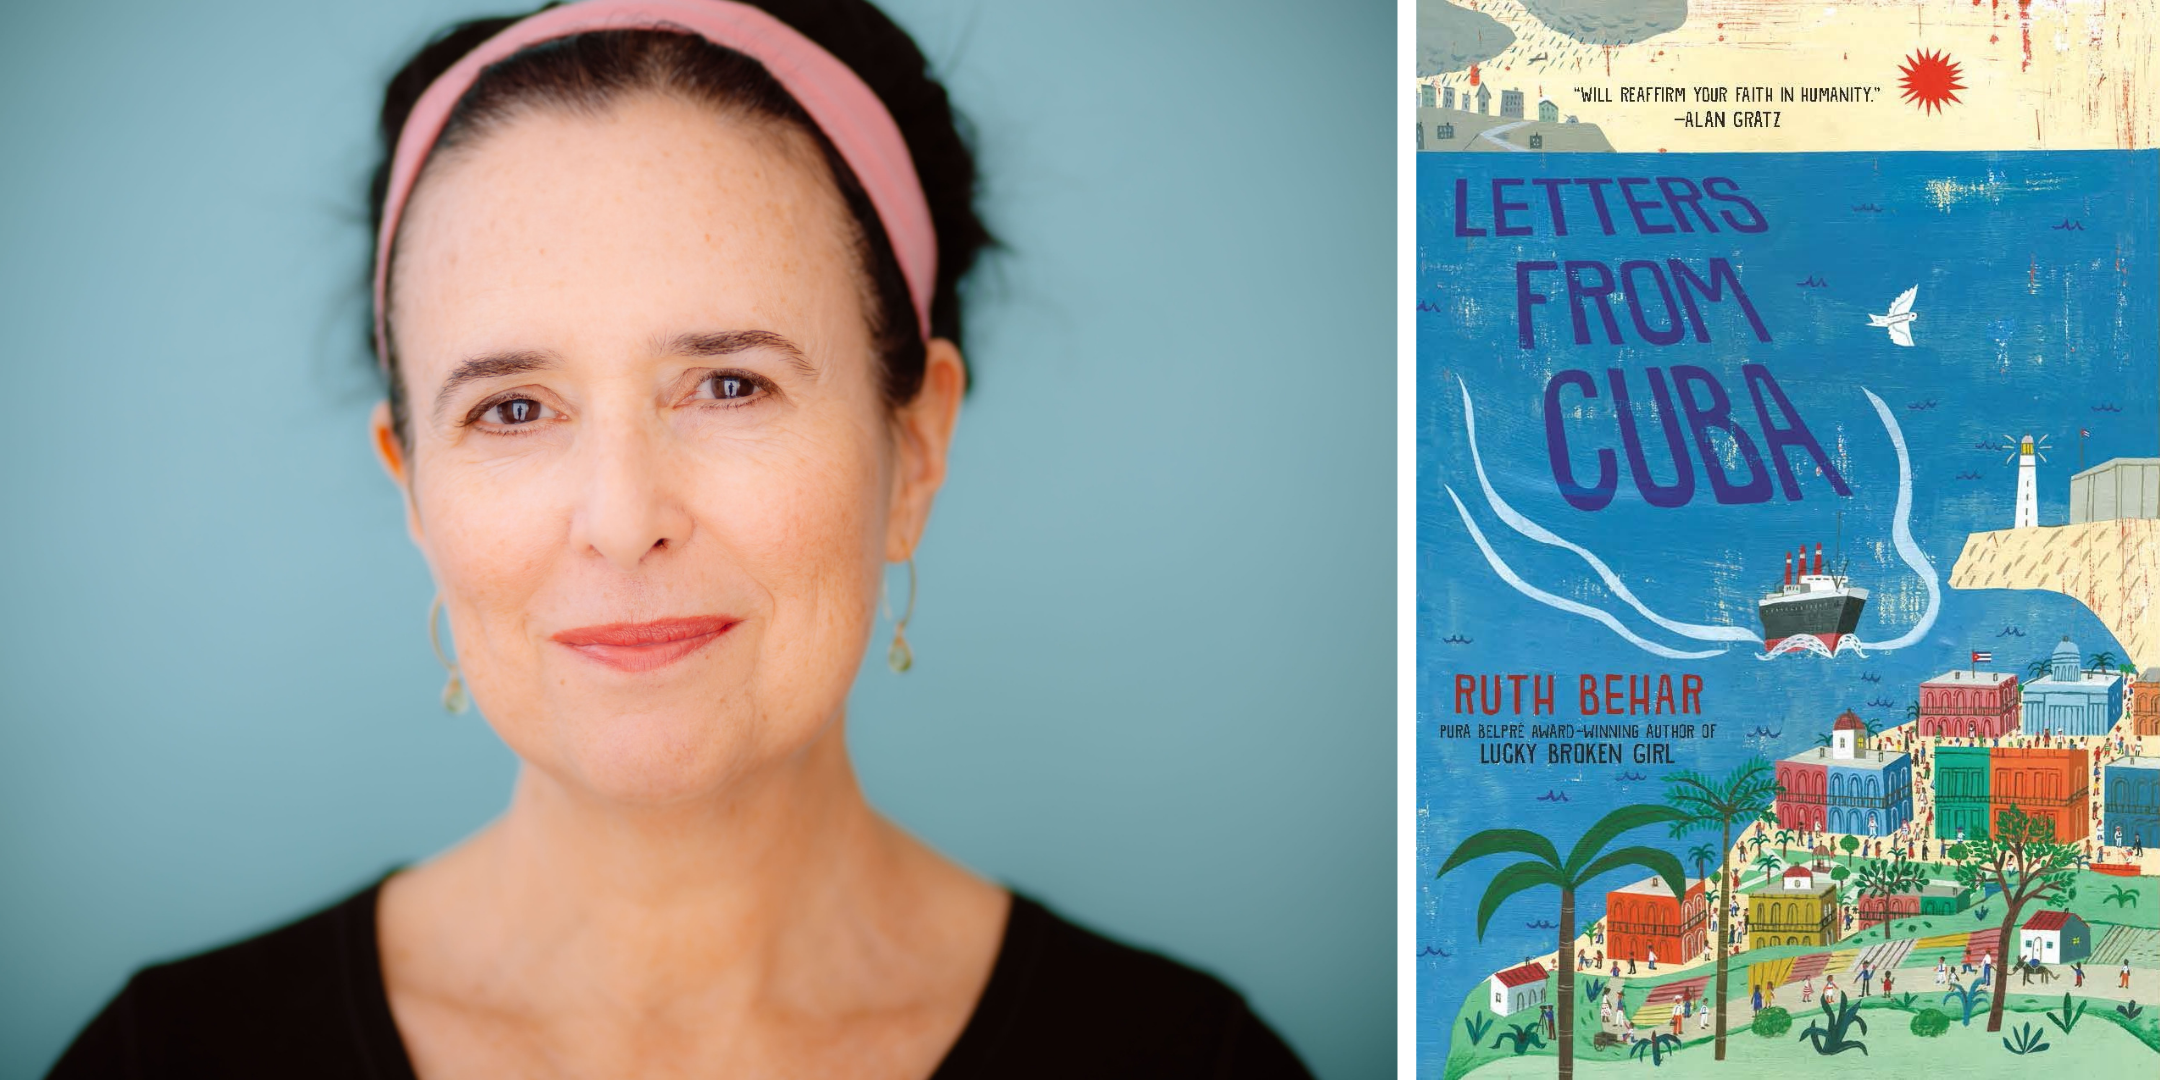 Author Ruth Behar on Jewish Life in Cuba